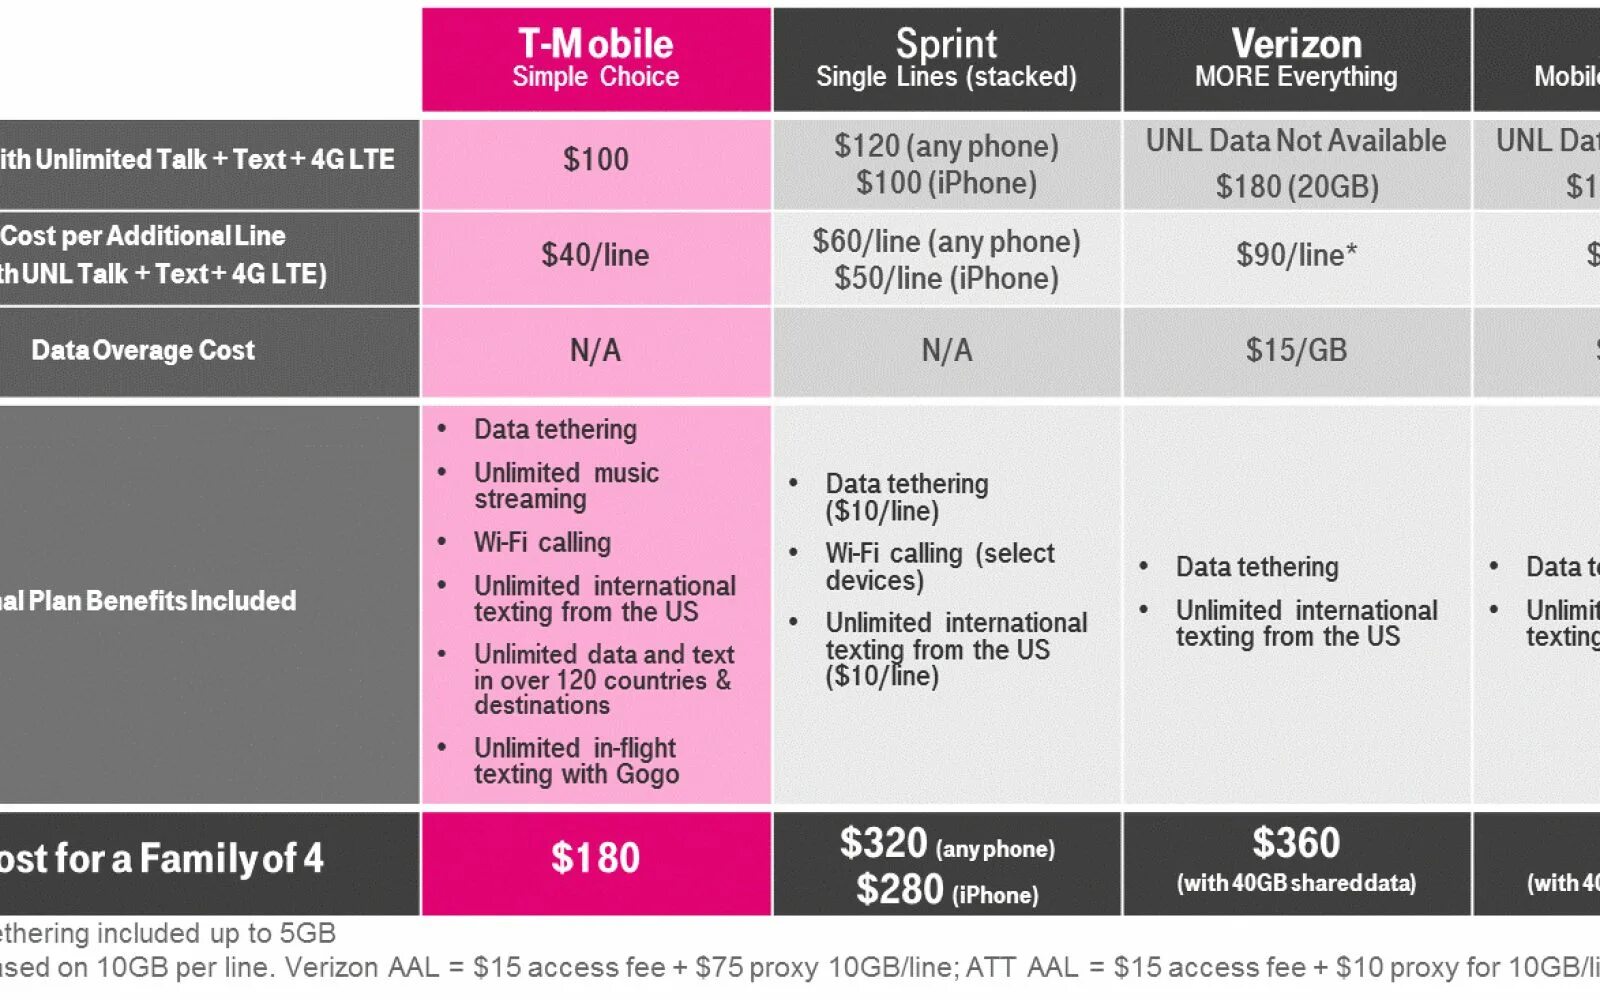 T mobile Verizon. T mobile Sprint. T mobile Sprint графики. T mobile MK Tarifi. 100 available